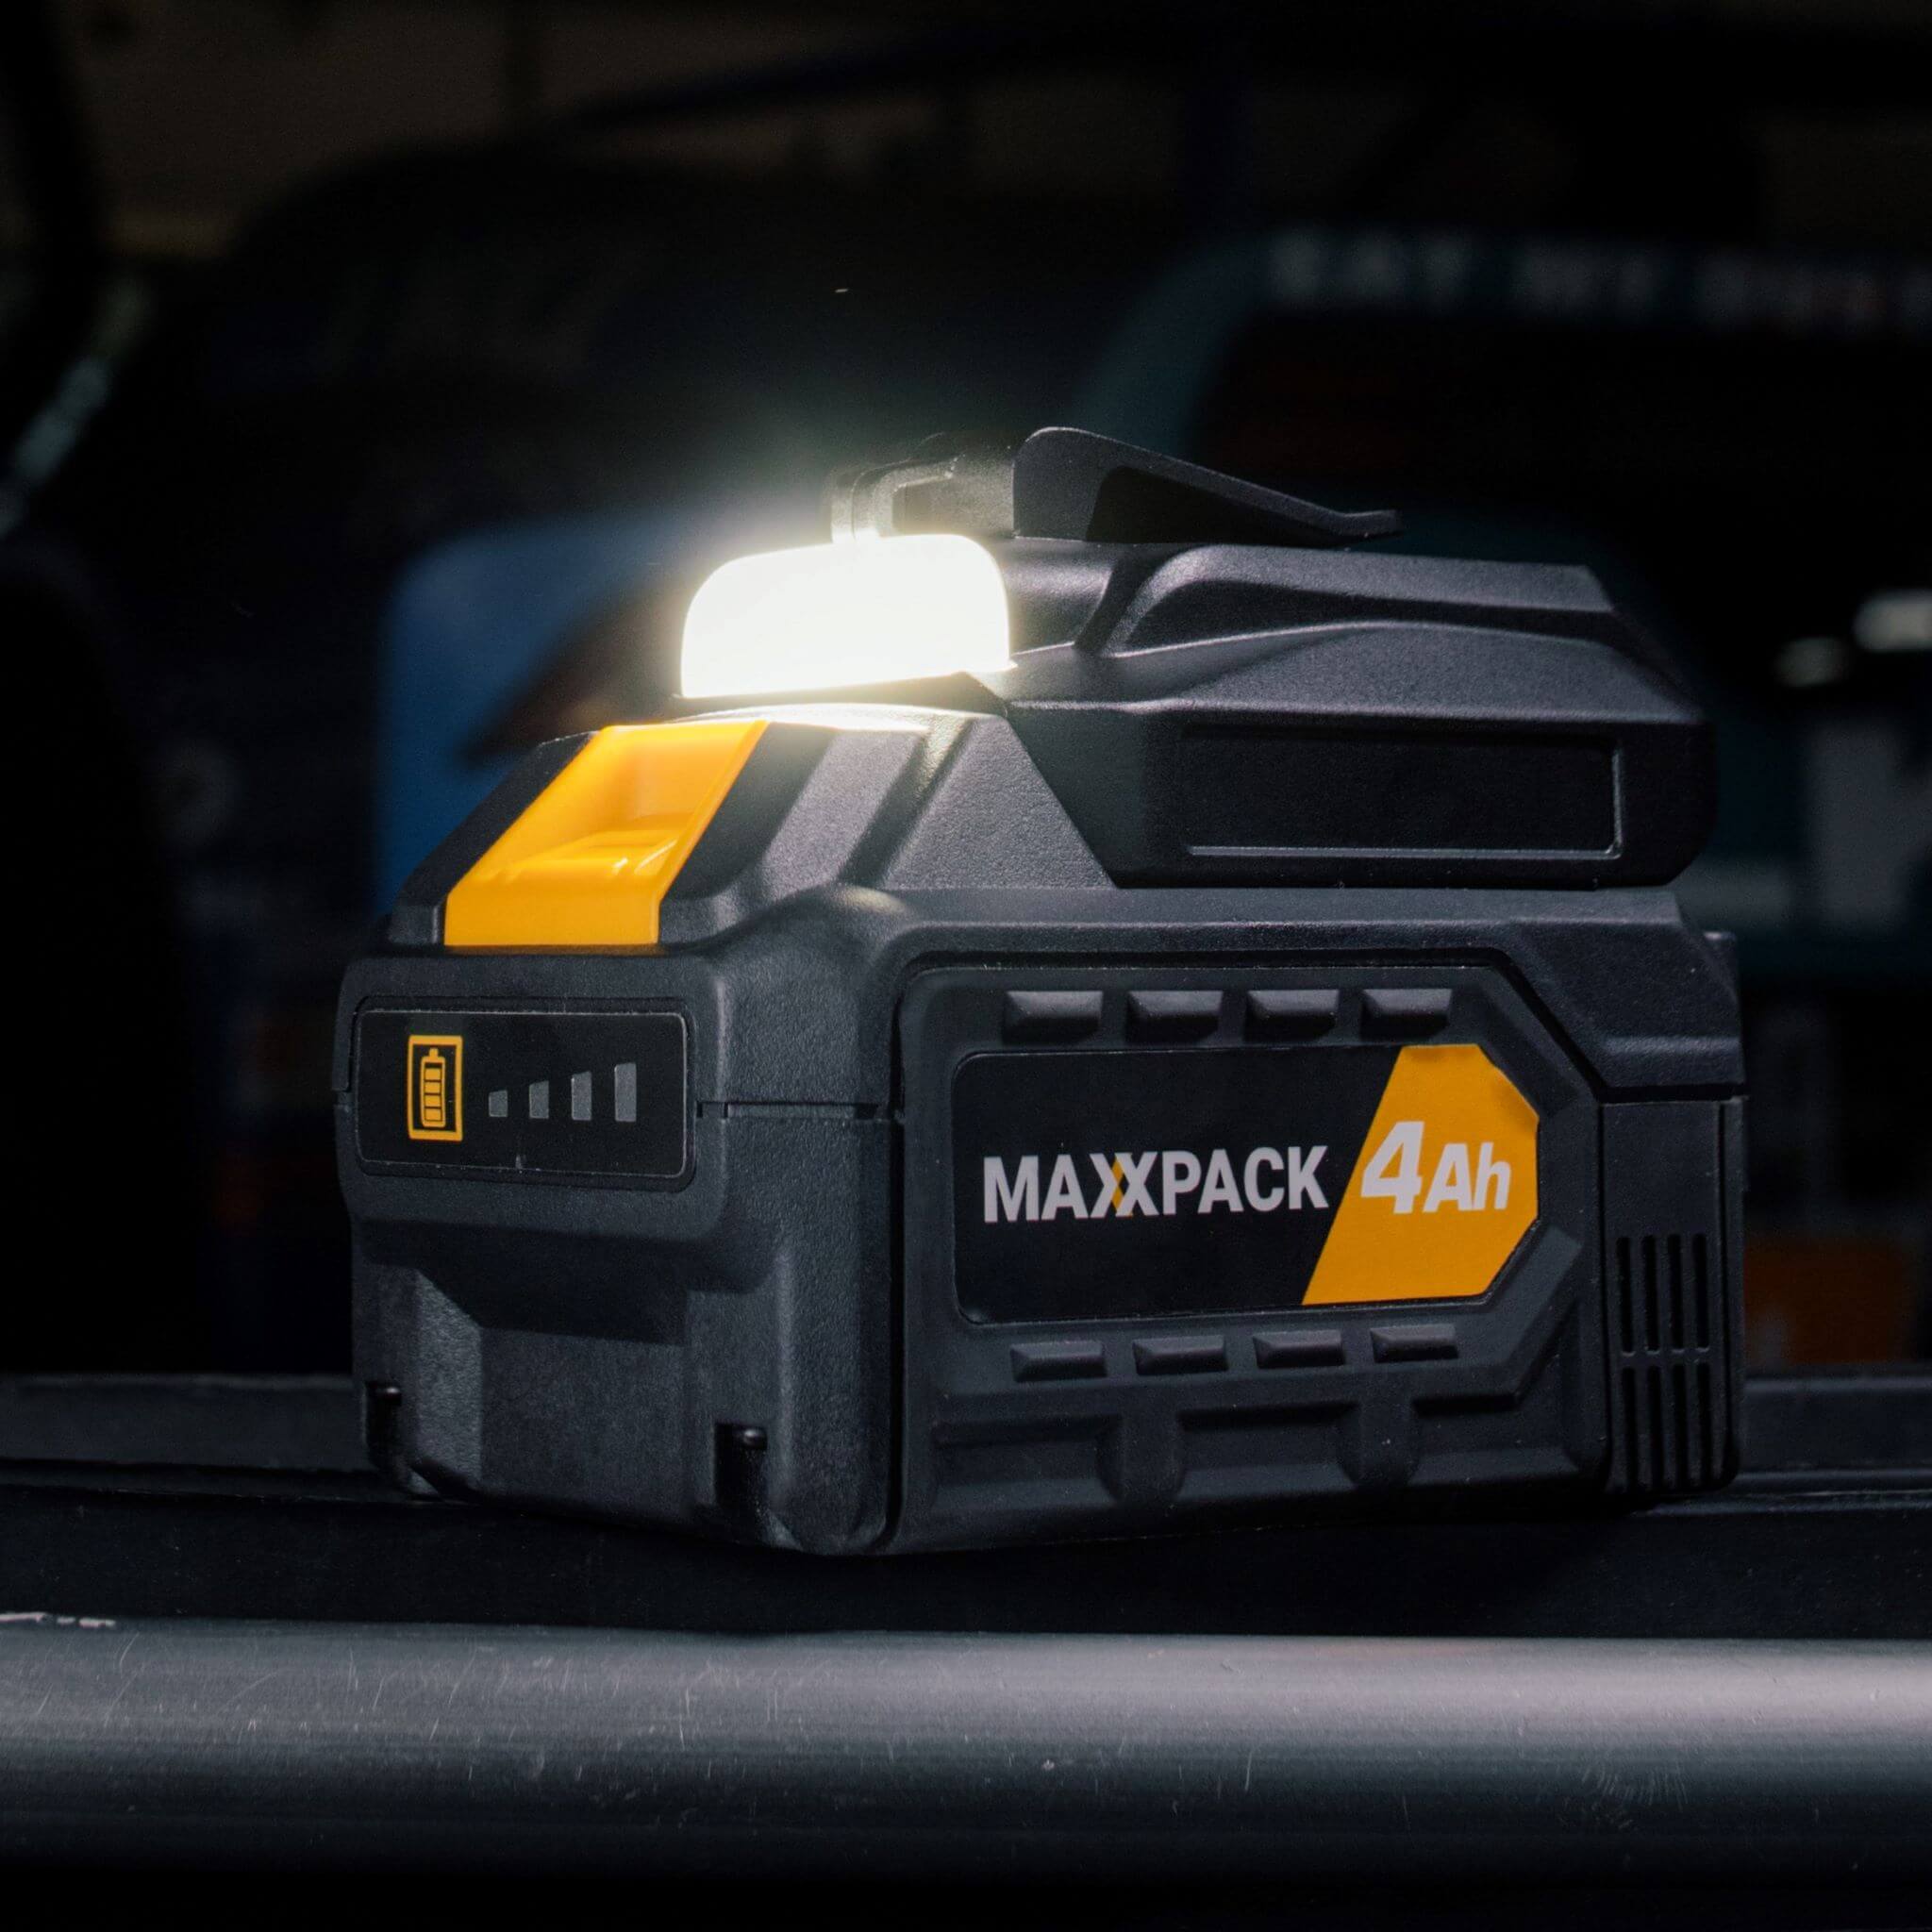 Battery USB adapter and Flashlight | 18V Maxxpack collection Batavia